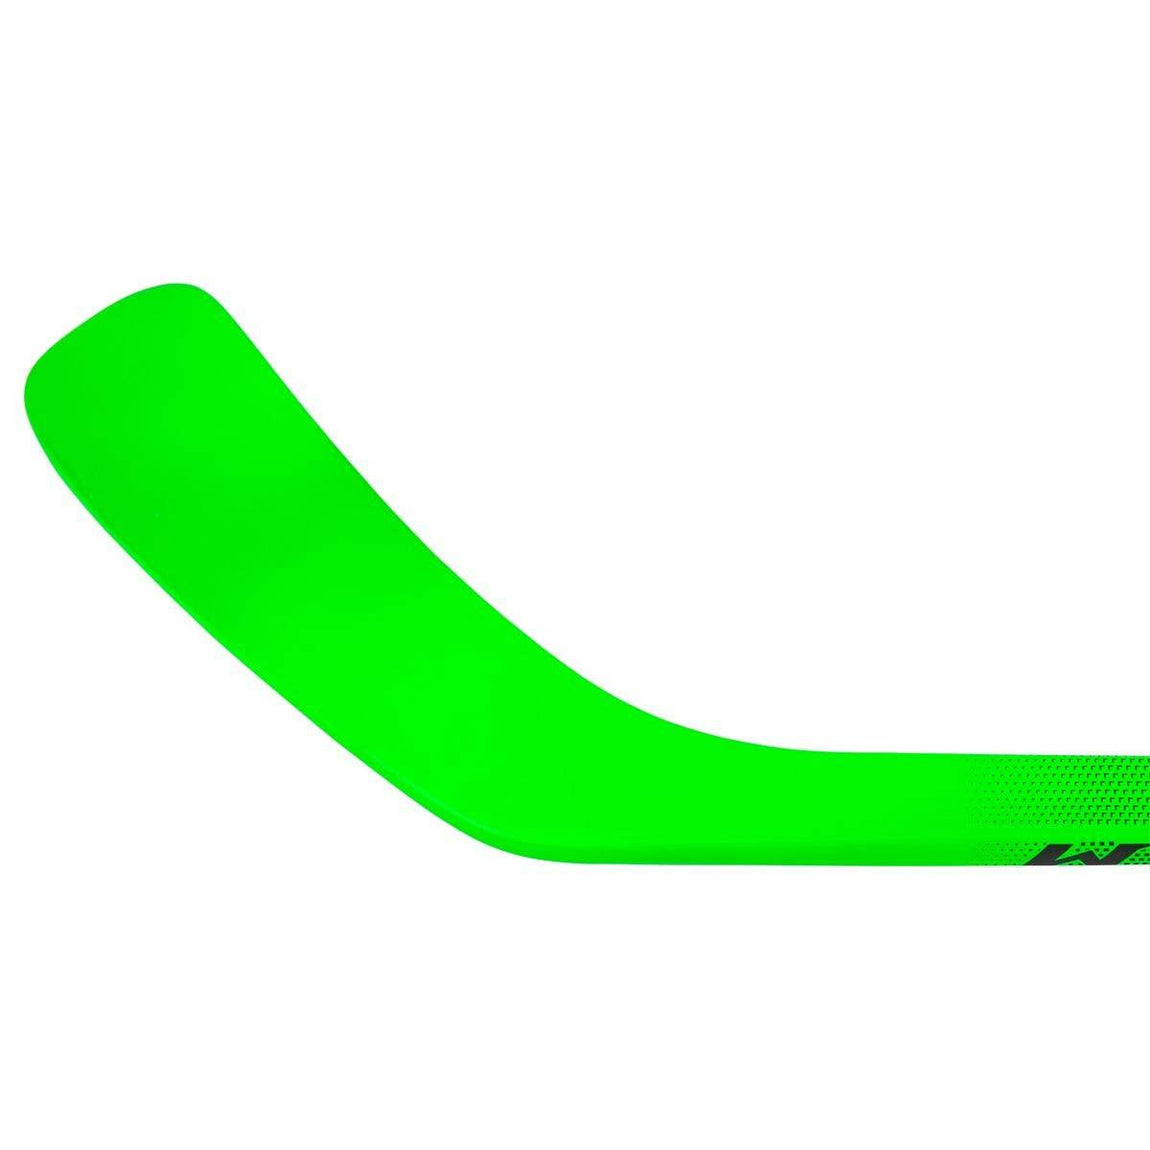 Ribcor 76K Hockey Stick - Junior - Sports Excellence